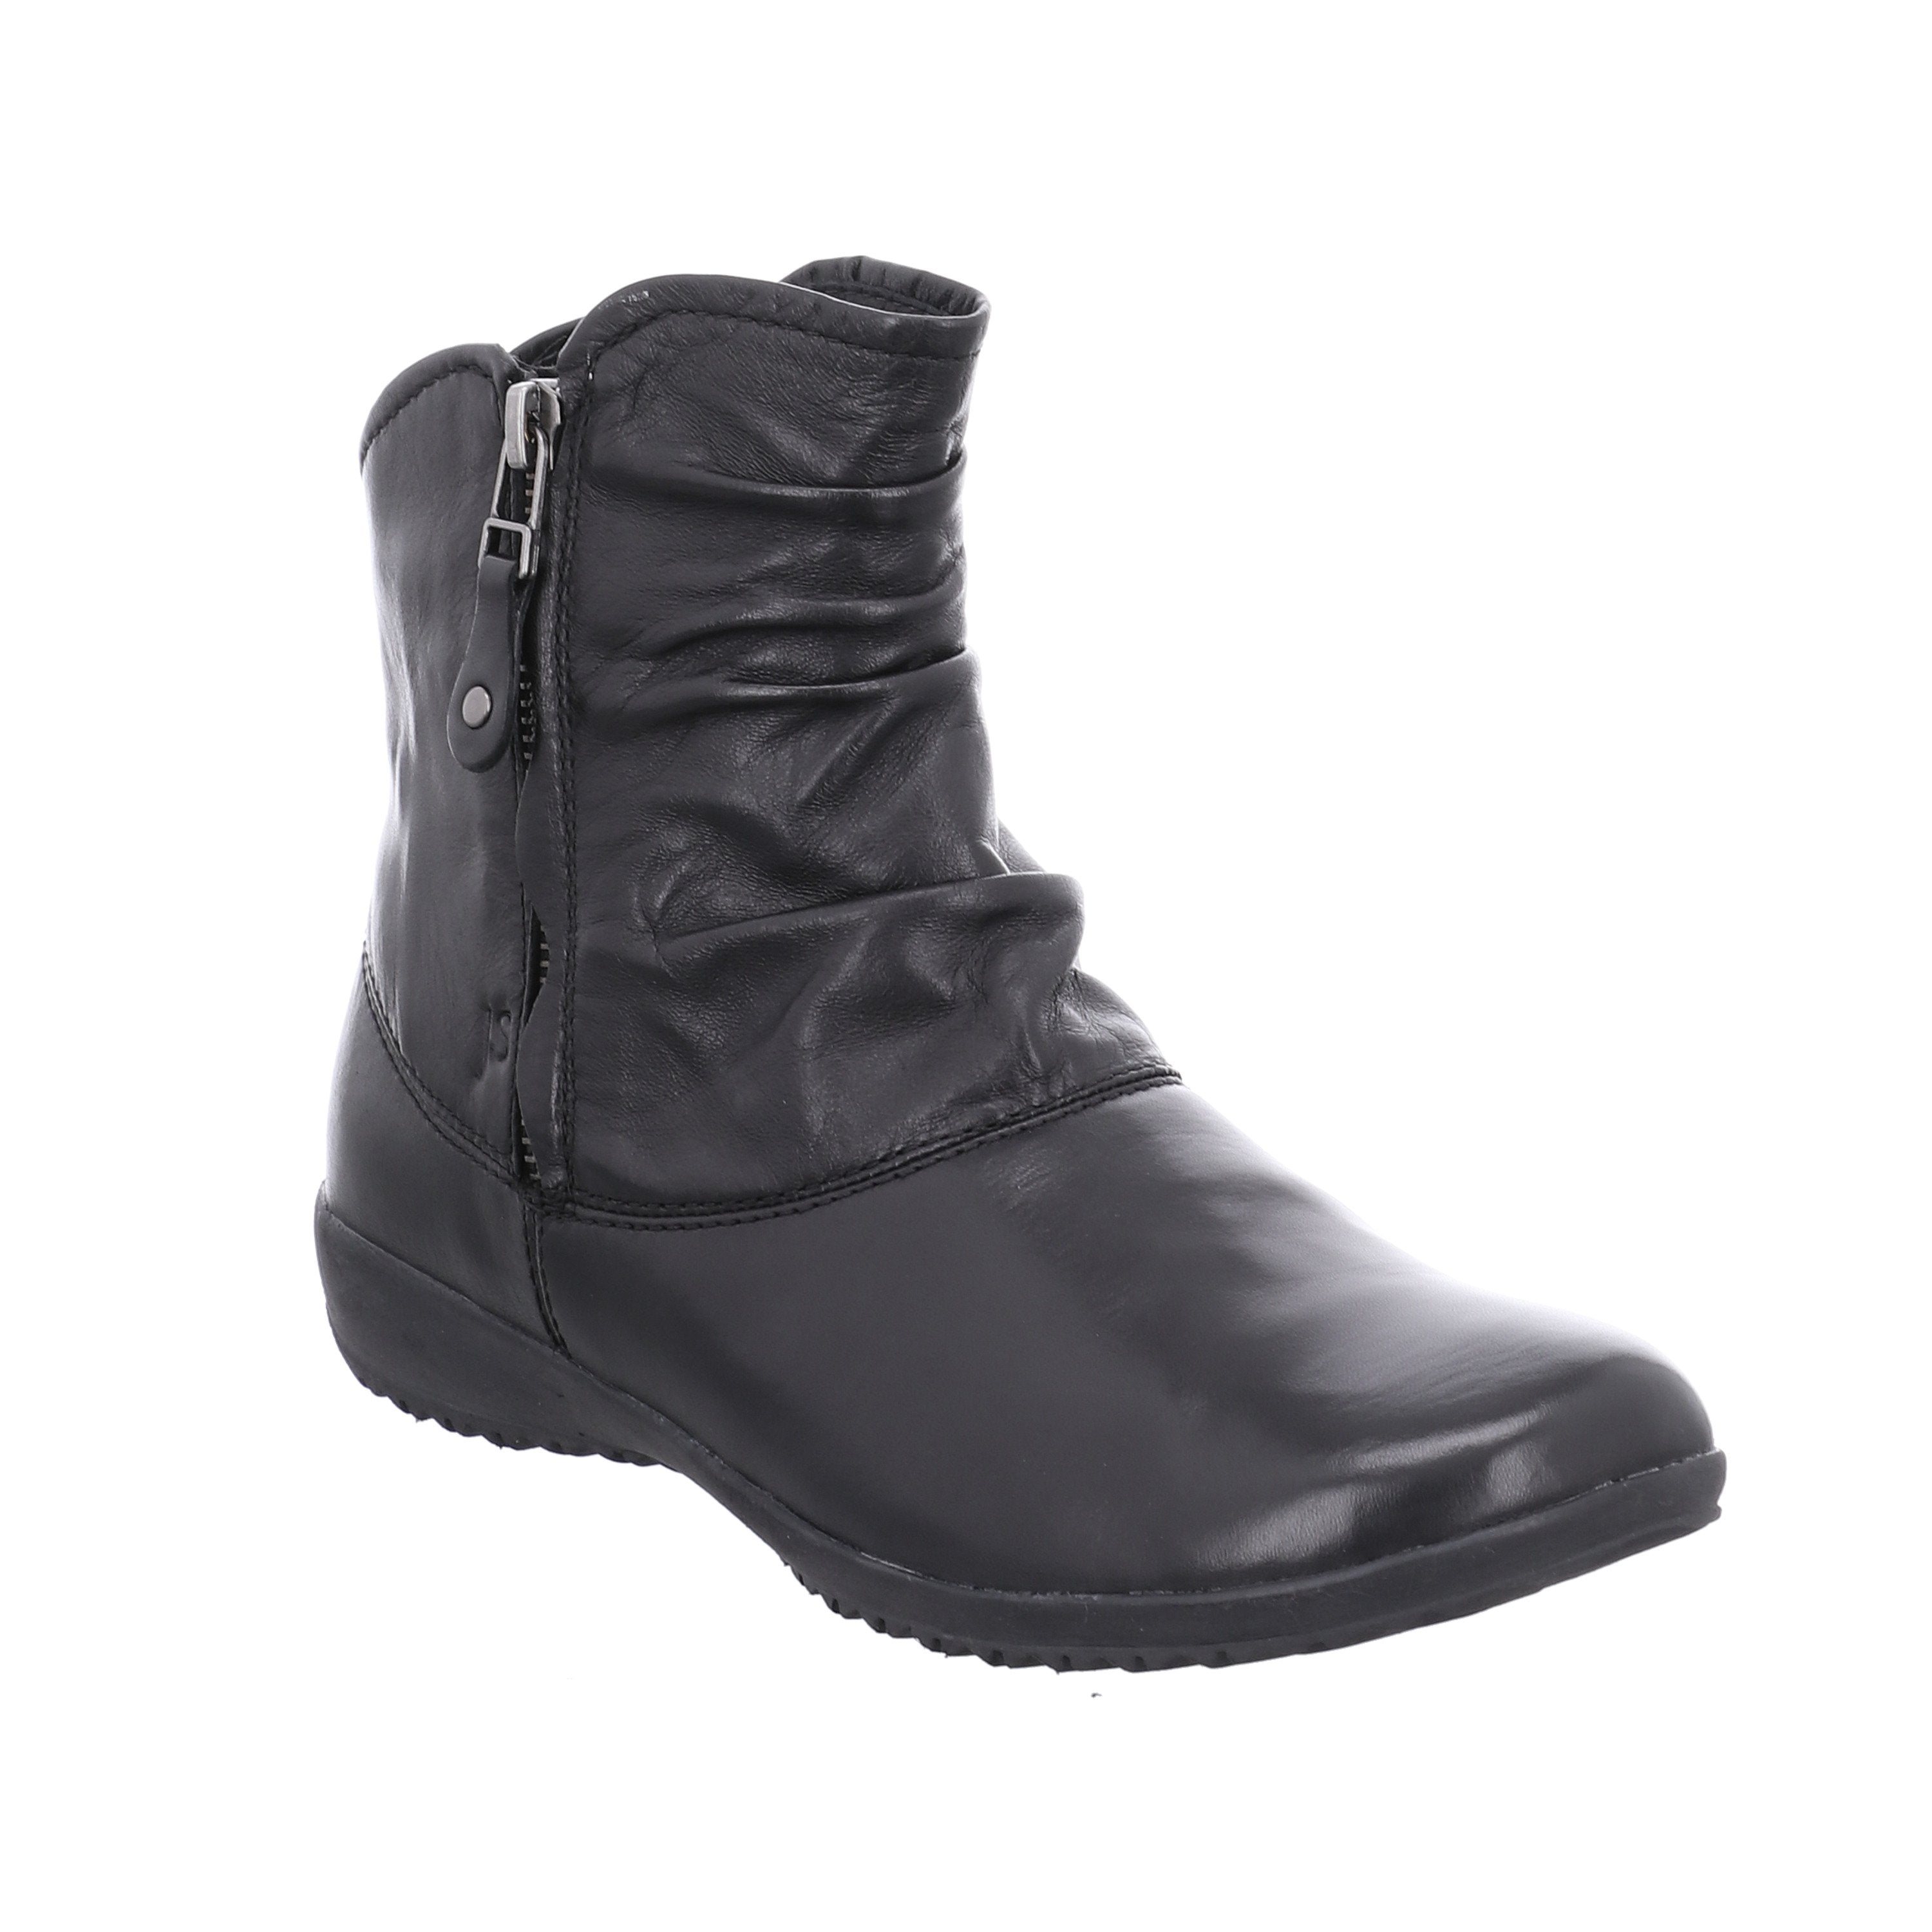 Naly 24 - Women's Boot | JOSEF SEIBEL USA - Official Store